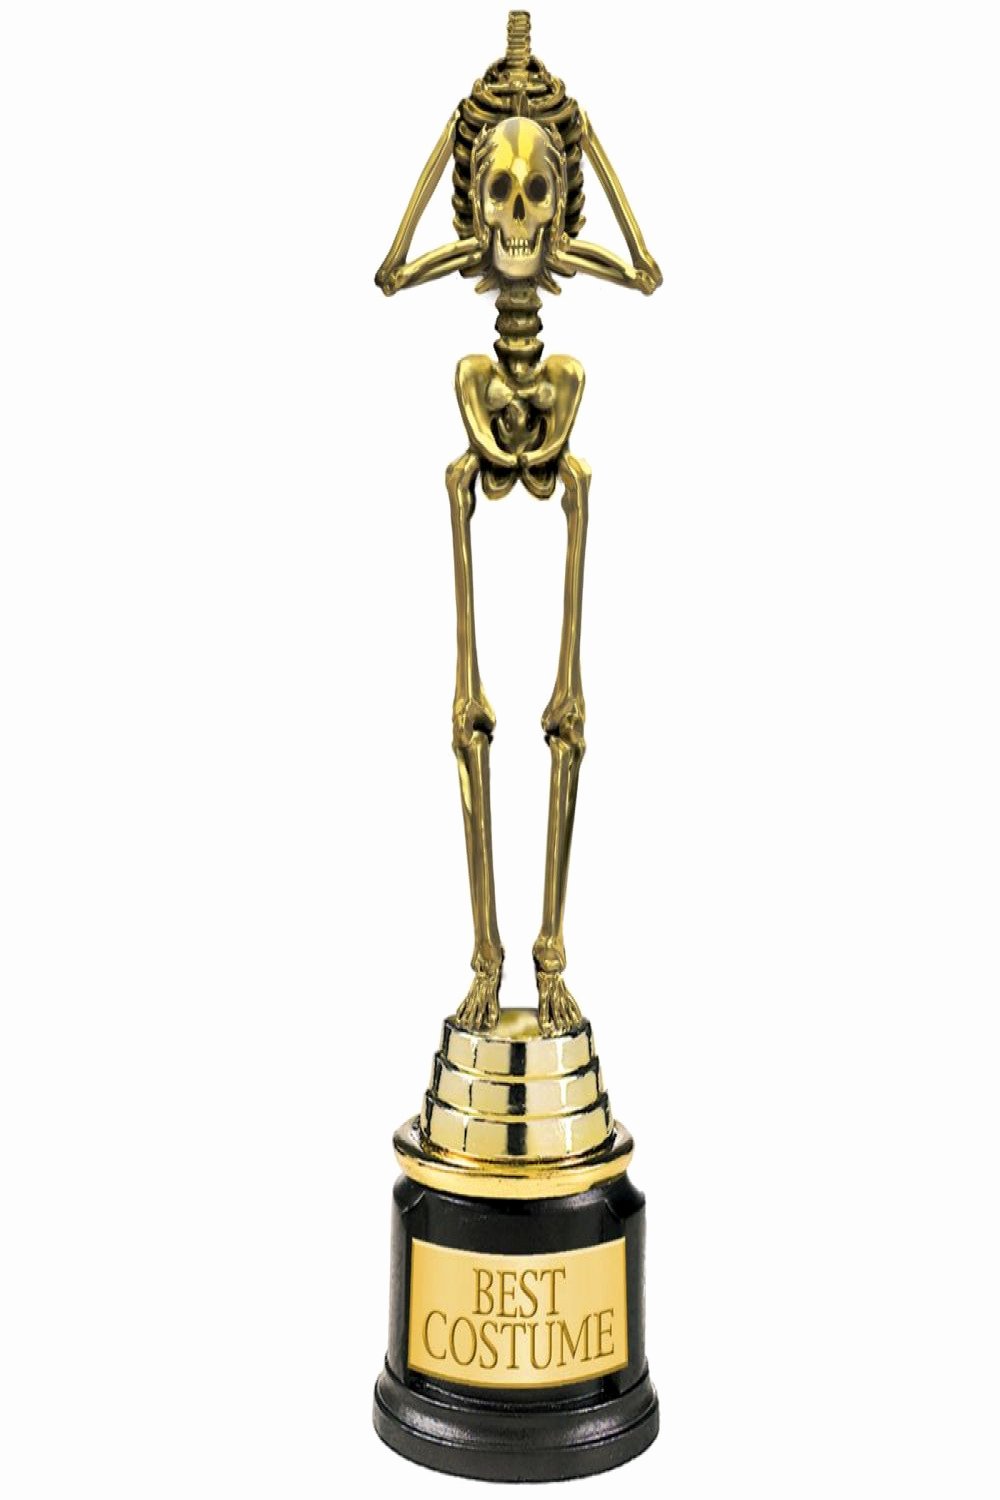 Best Costume Award Trophy Inspirational Halloween Trophies and Awards Best Costume Trophy